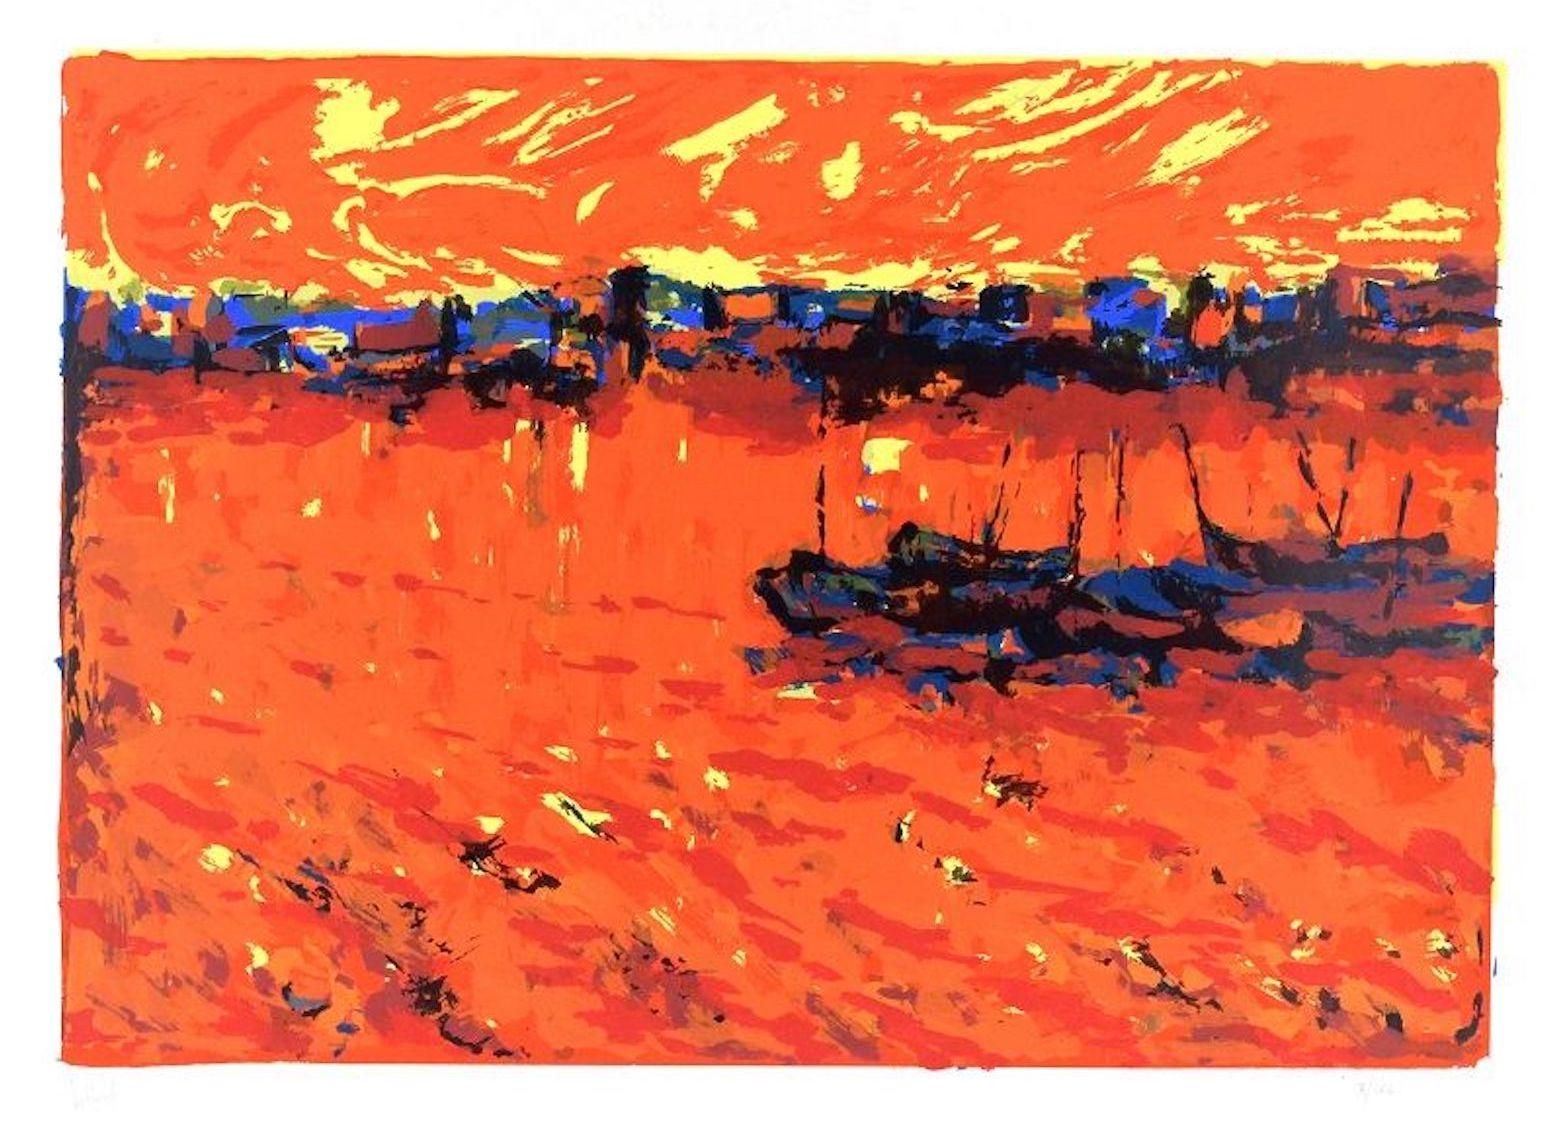 Vincenzo Monti Landscape Print - Orange Langscape - Original Screen Print by V. Monti - 1970s